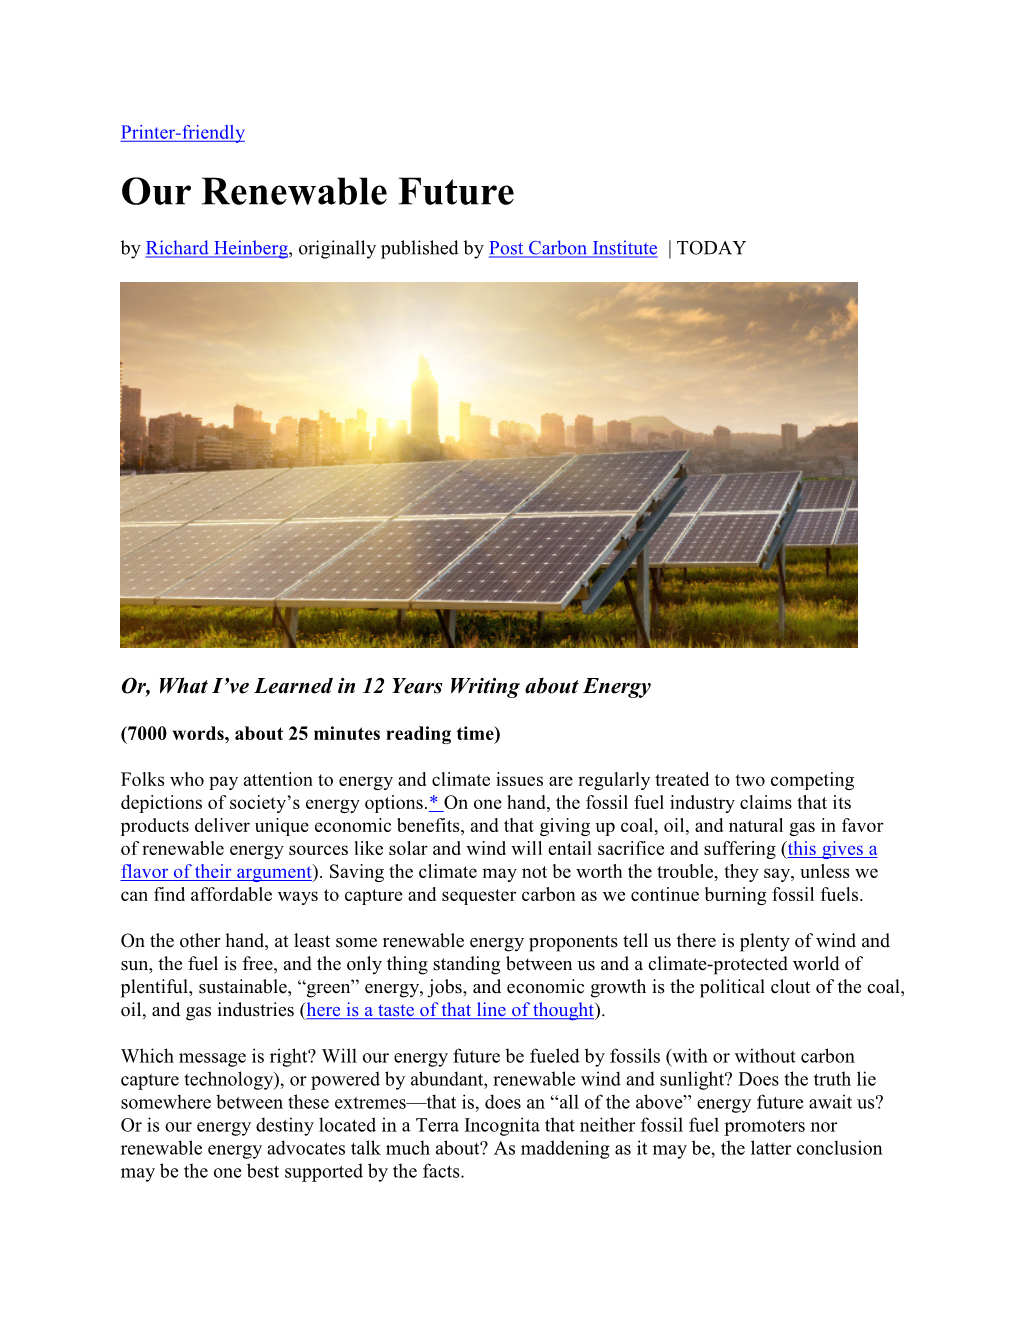 Our Renewable Future.Pdf